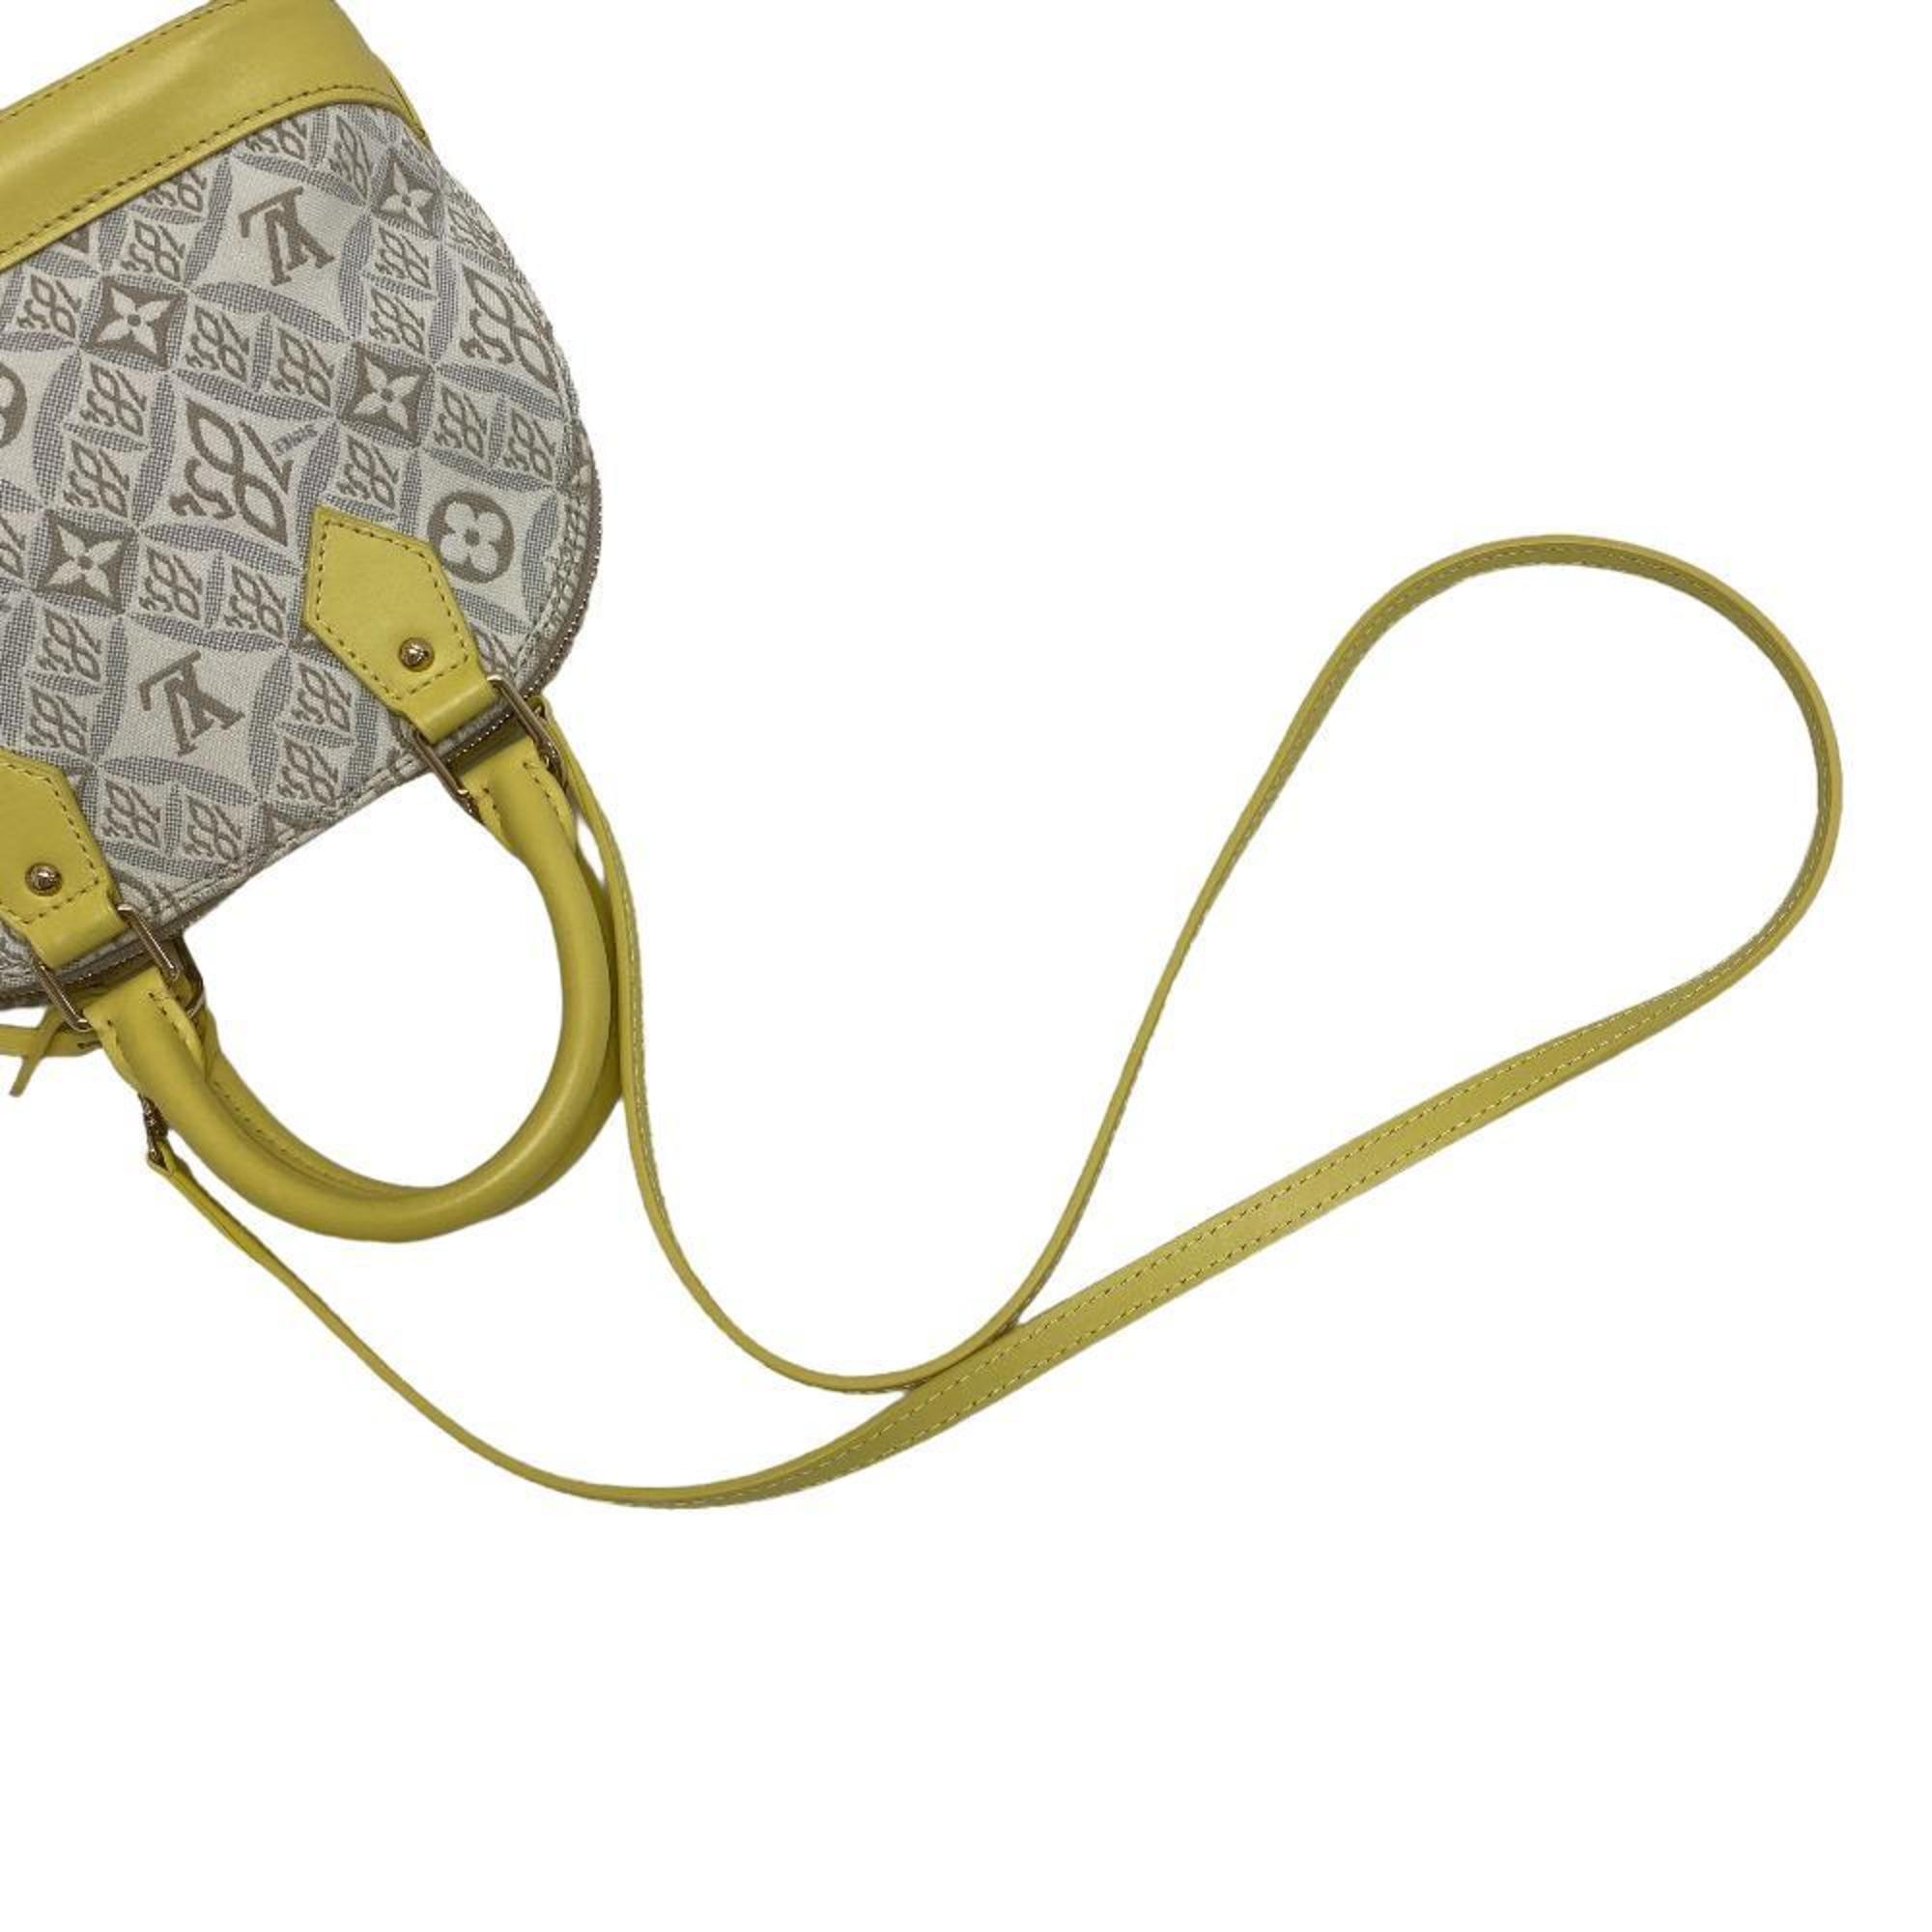 LOUIS VUITTON M59476 Alma BB 2WAY Shoulder Bag Since1854 Monogram Jacquard Handbag Yellow Ladies